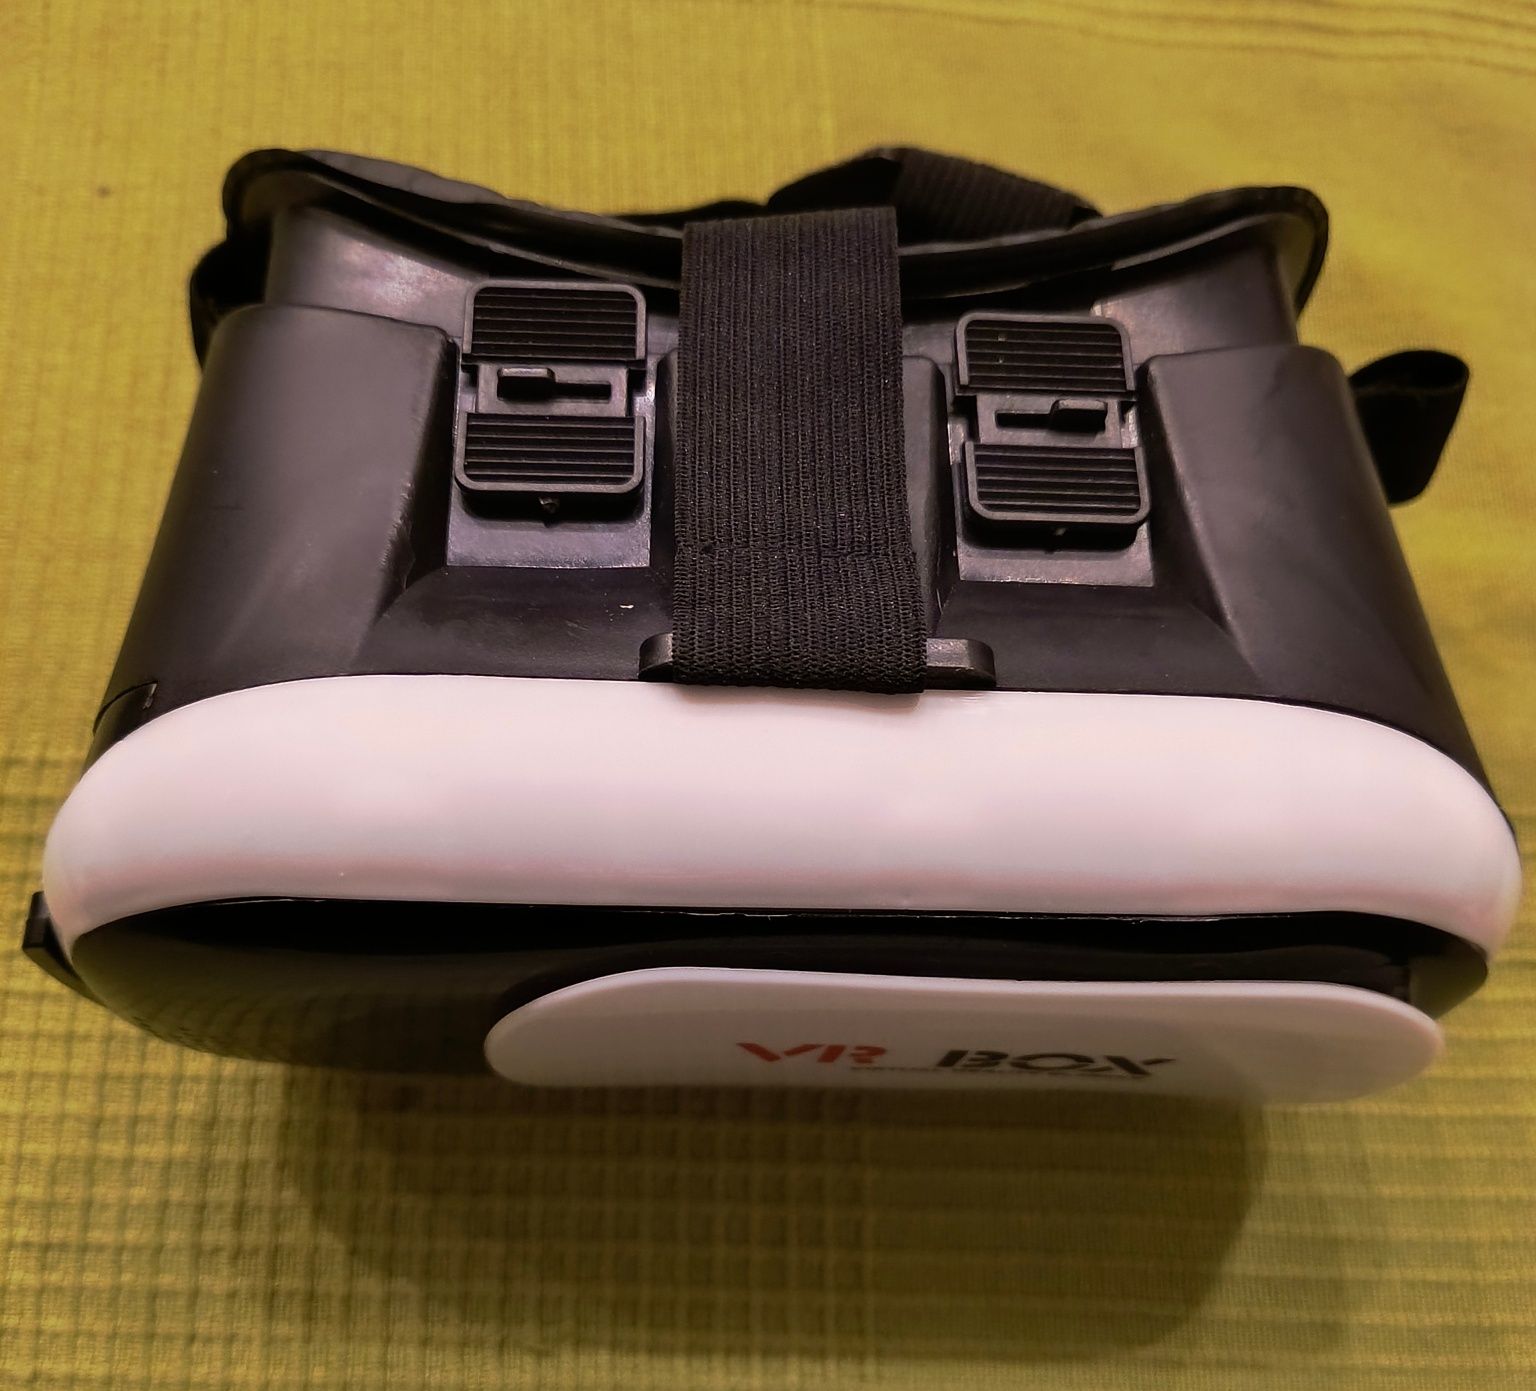 Okulary gogle VR Box